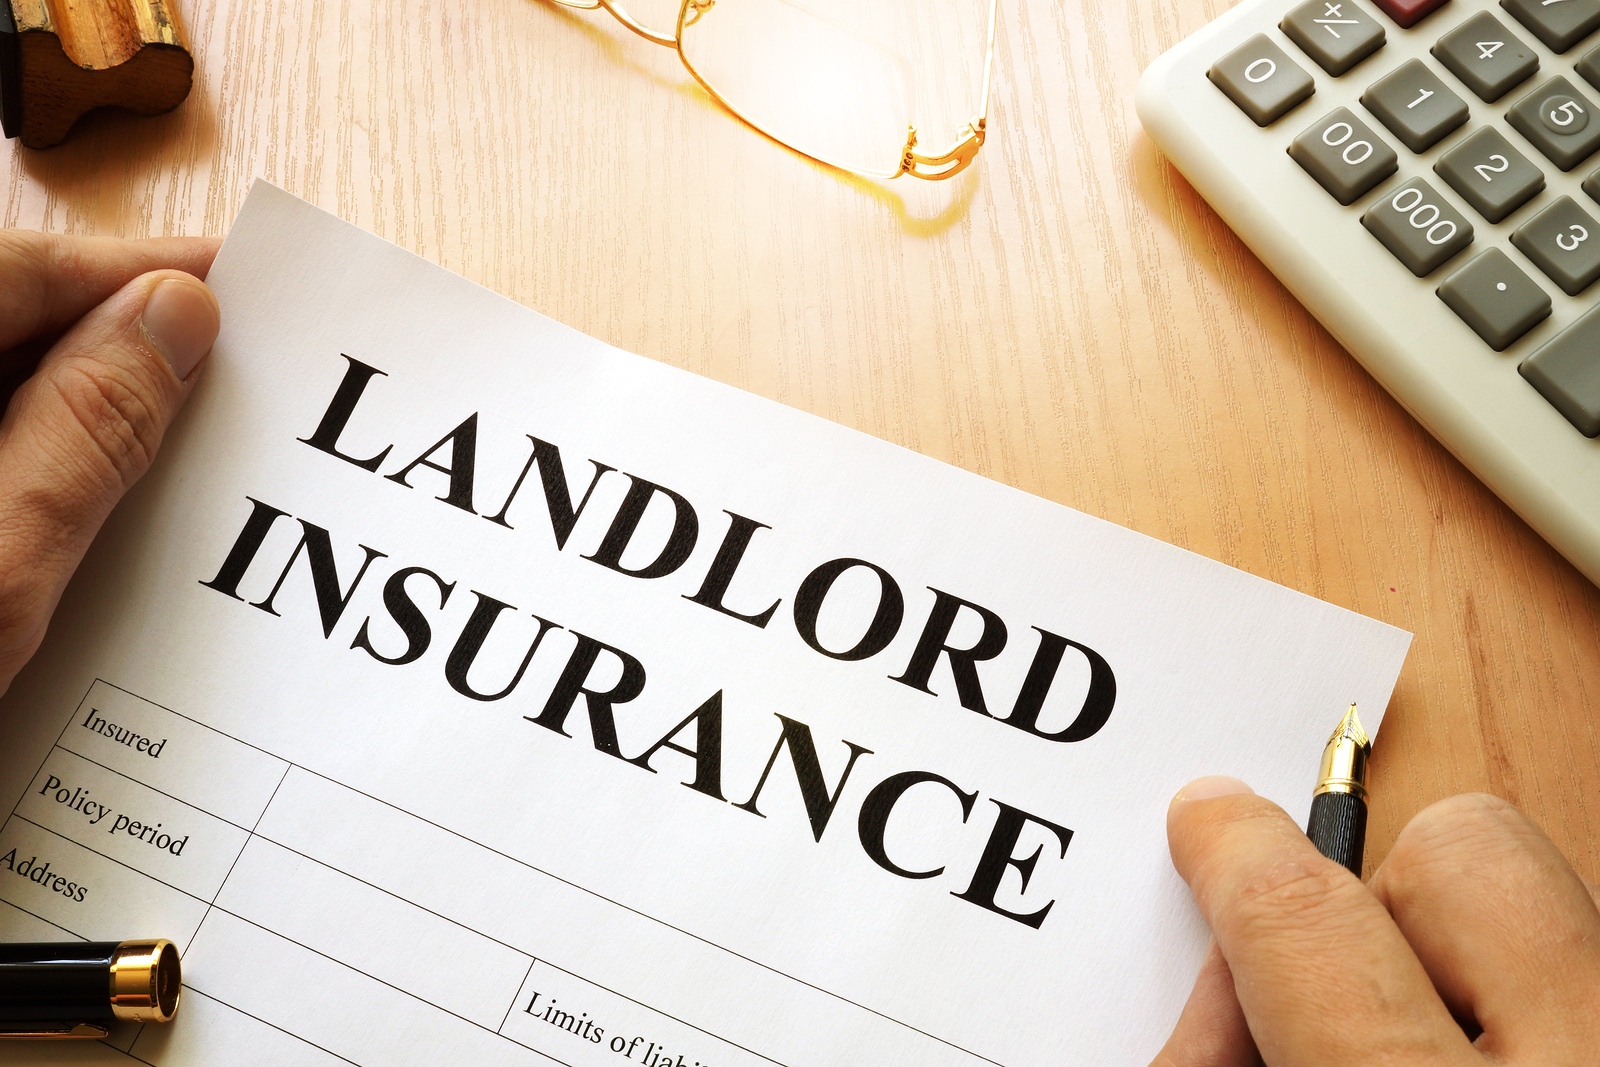 landlord insurance cost